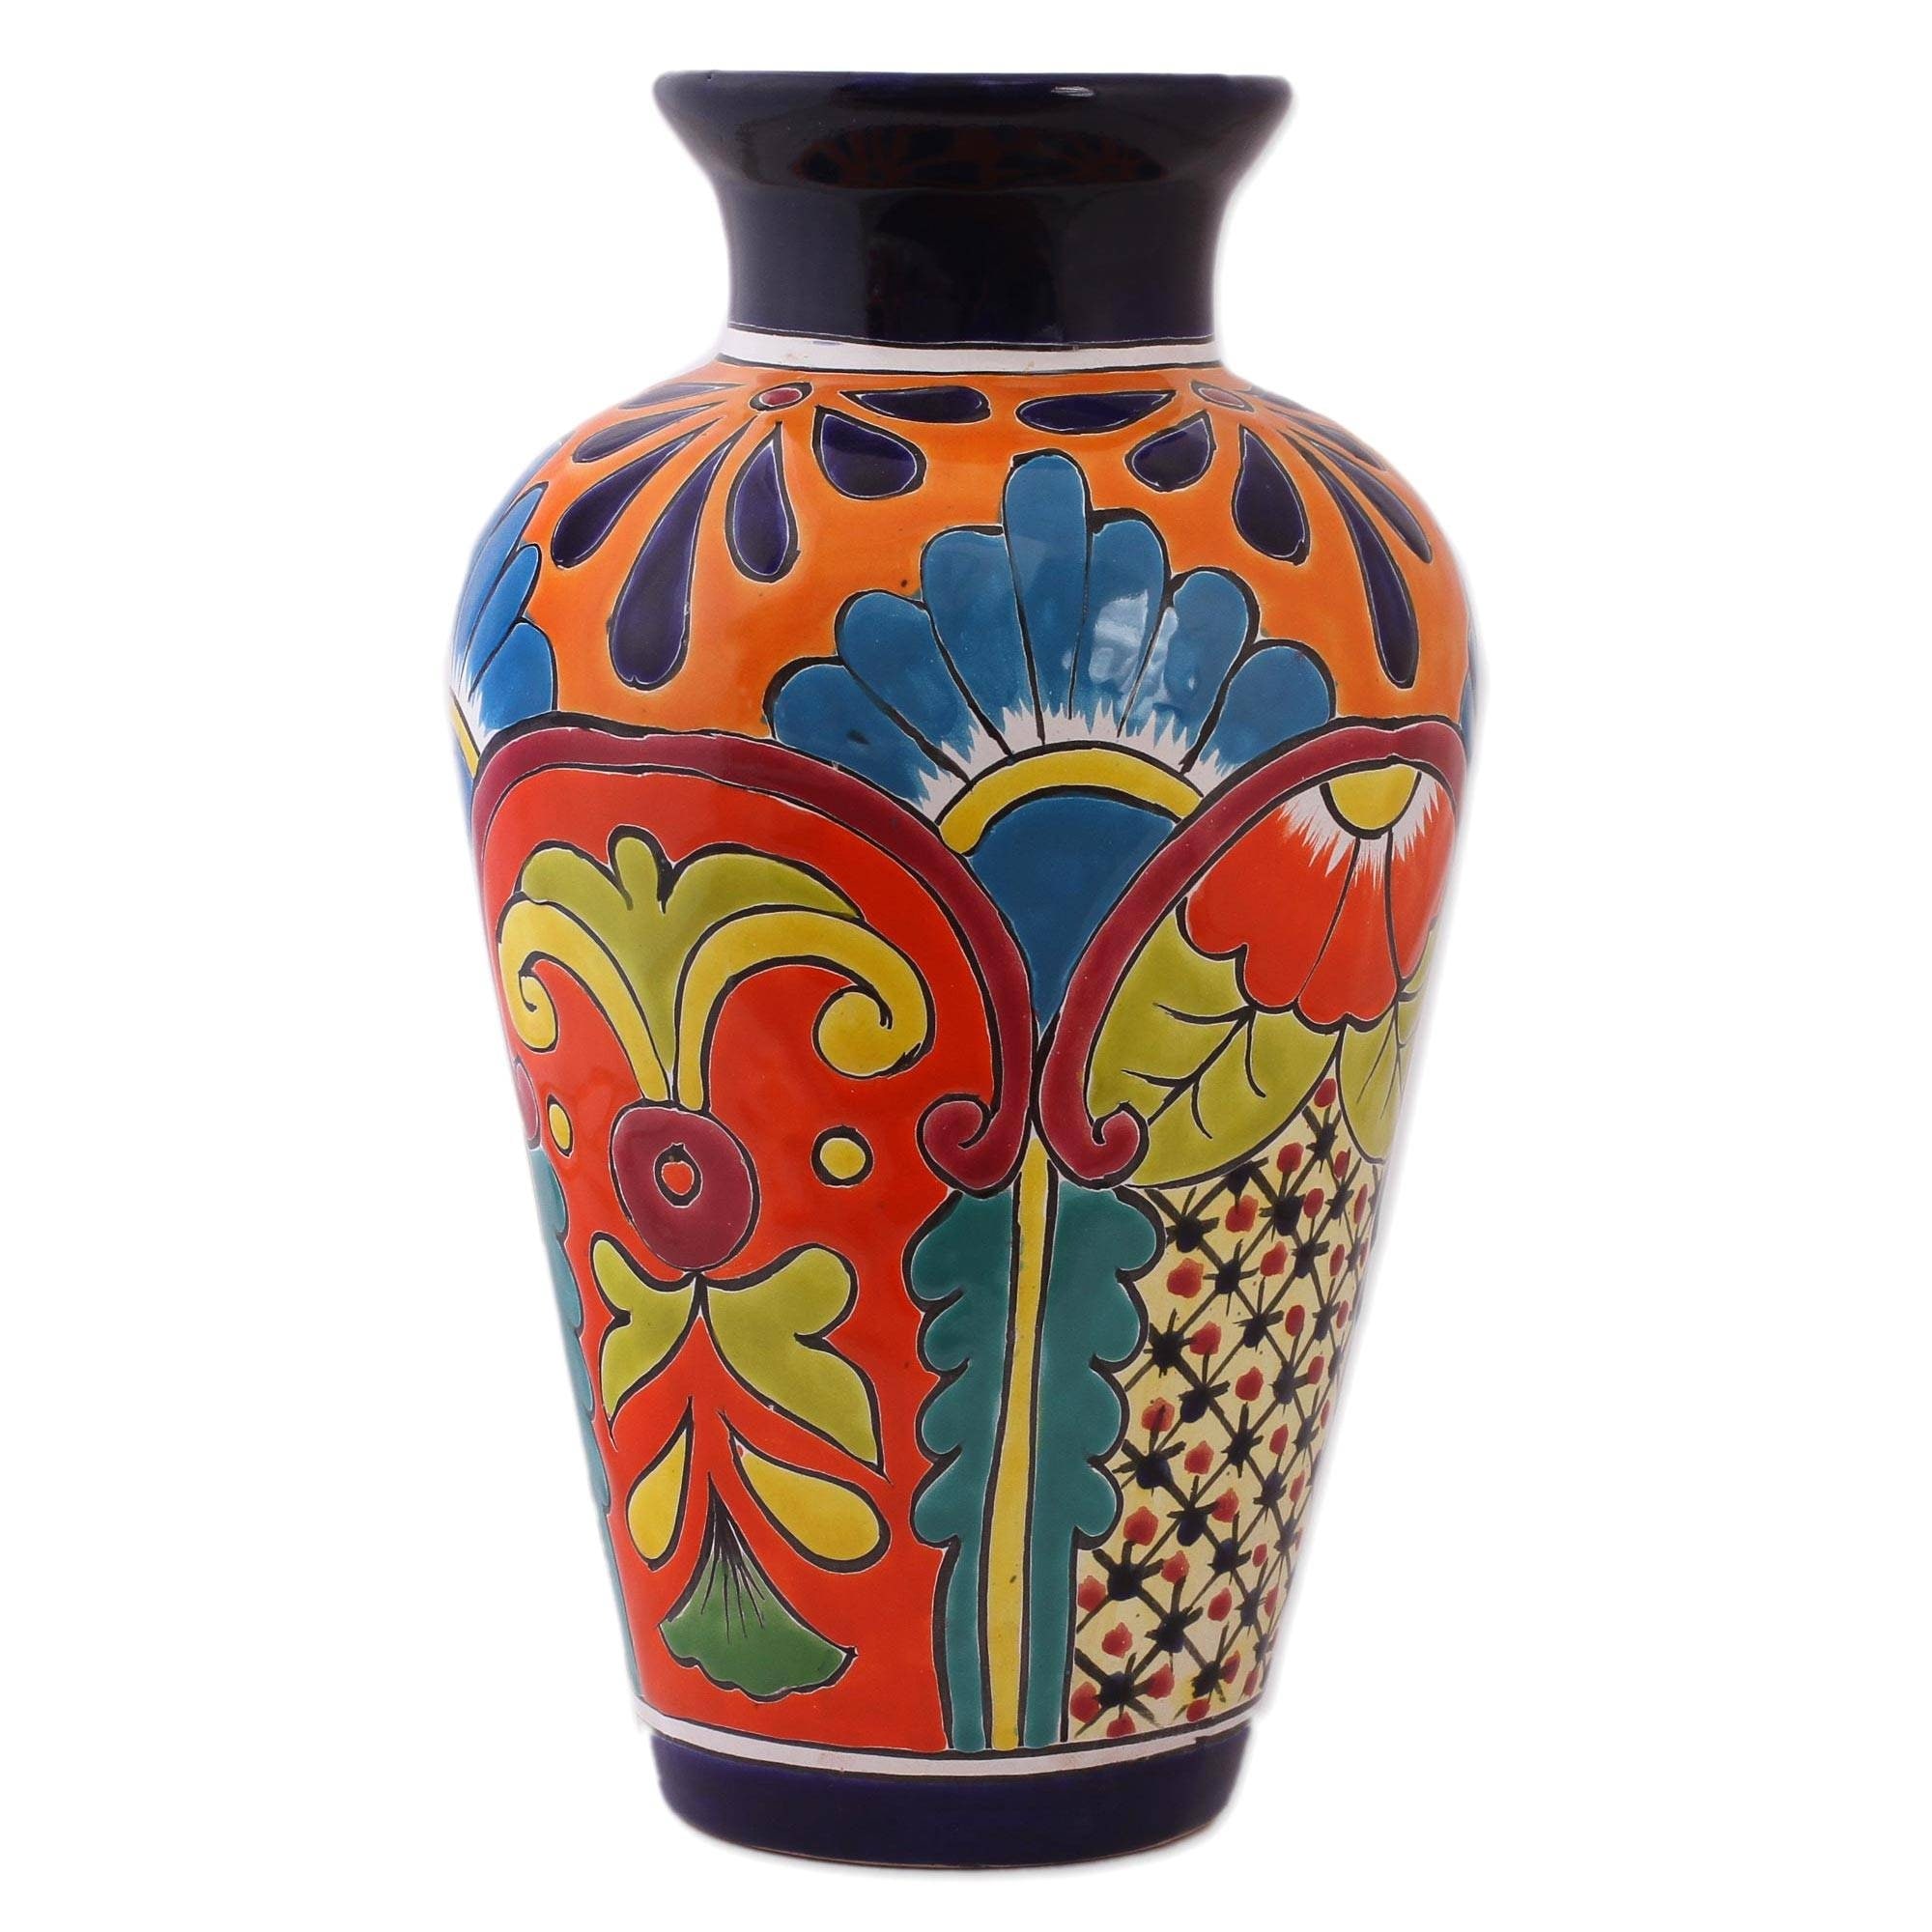 Flower vase or tabletop piece. Handbuilt ceramic vase with fun purples